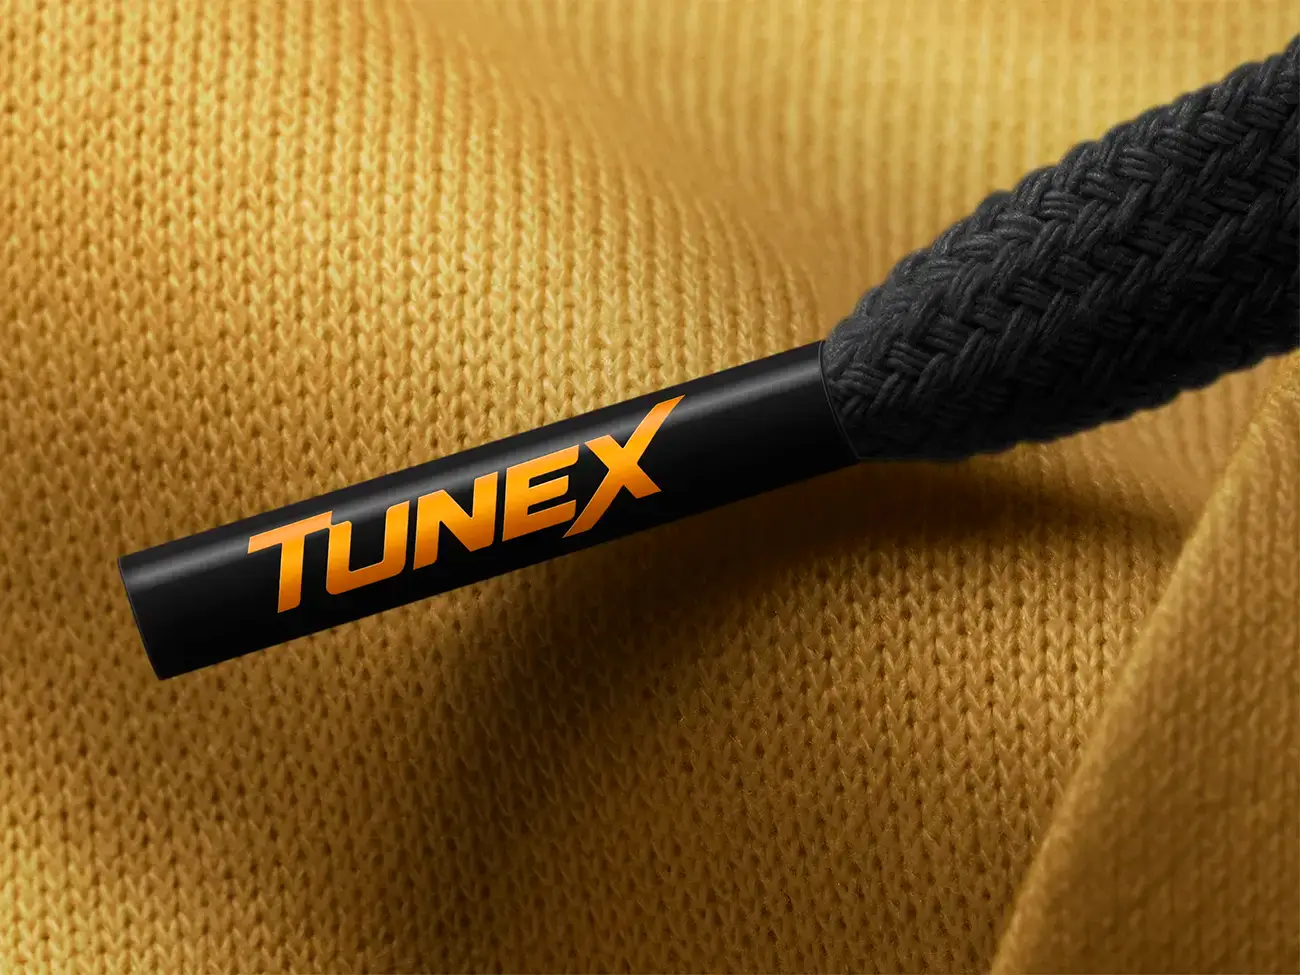 TuneX case